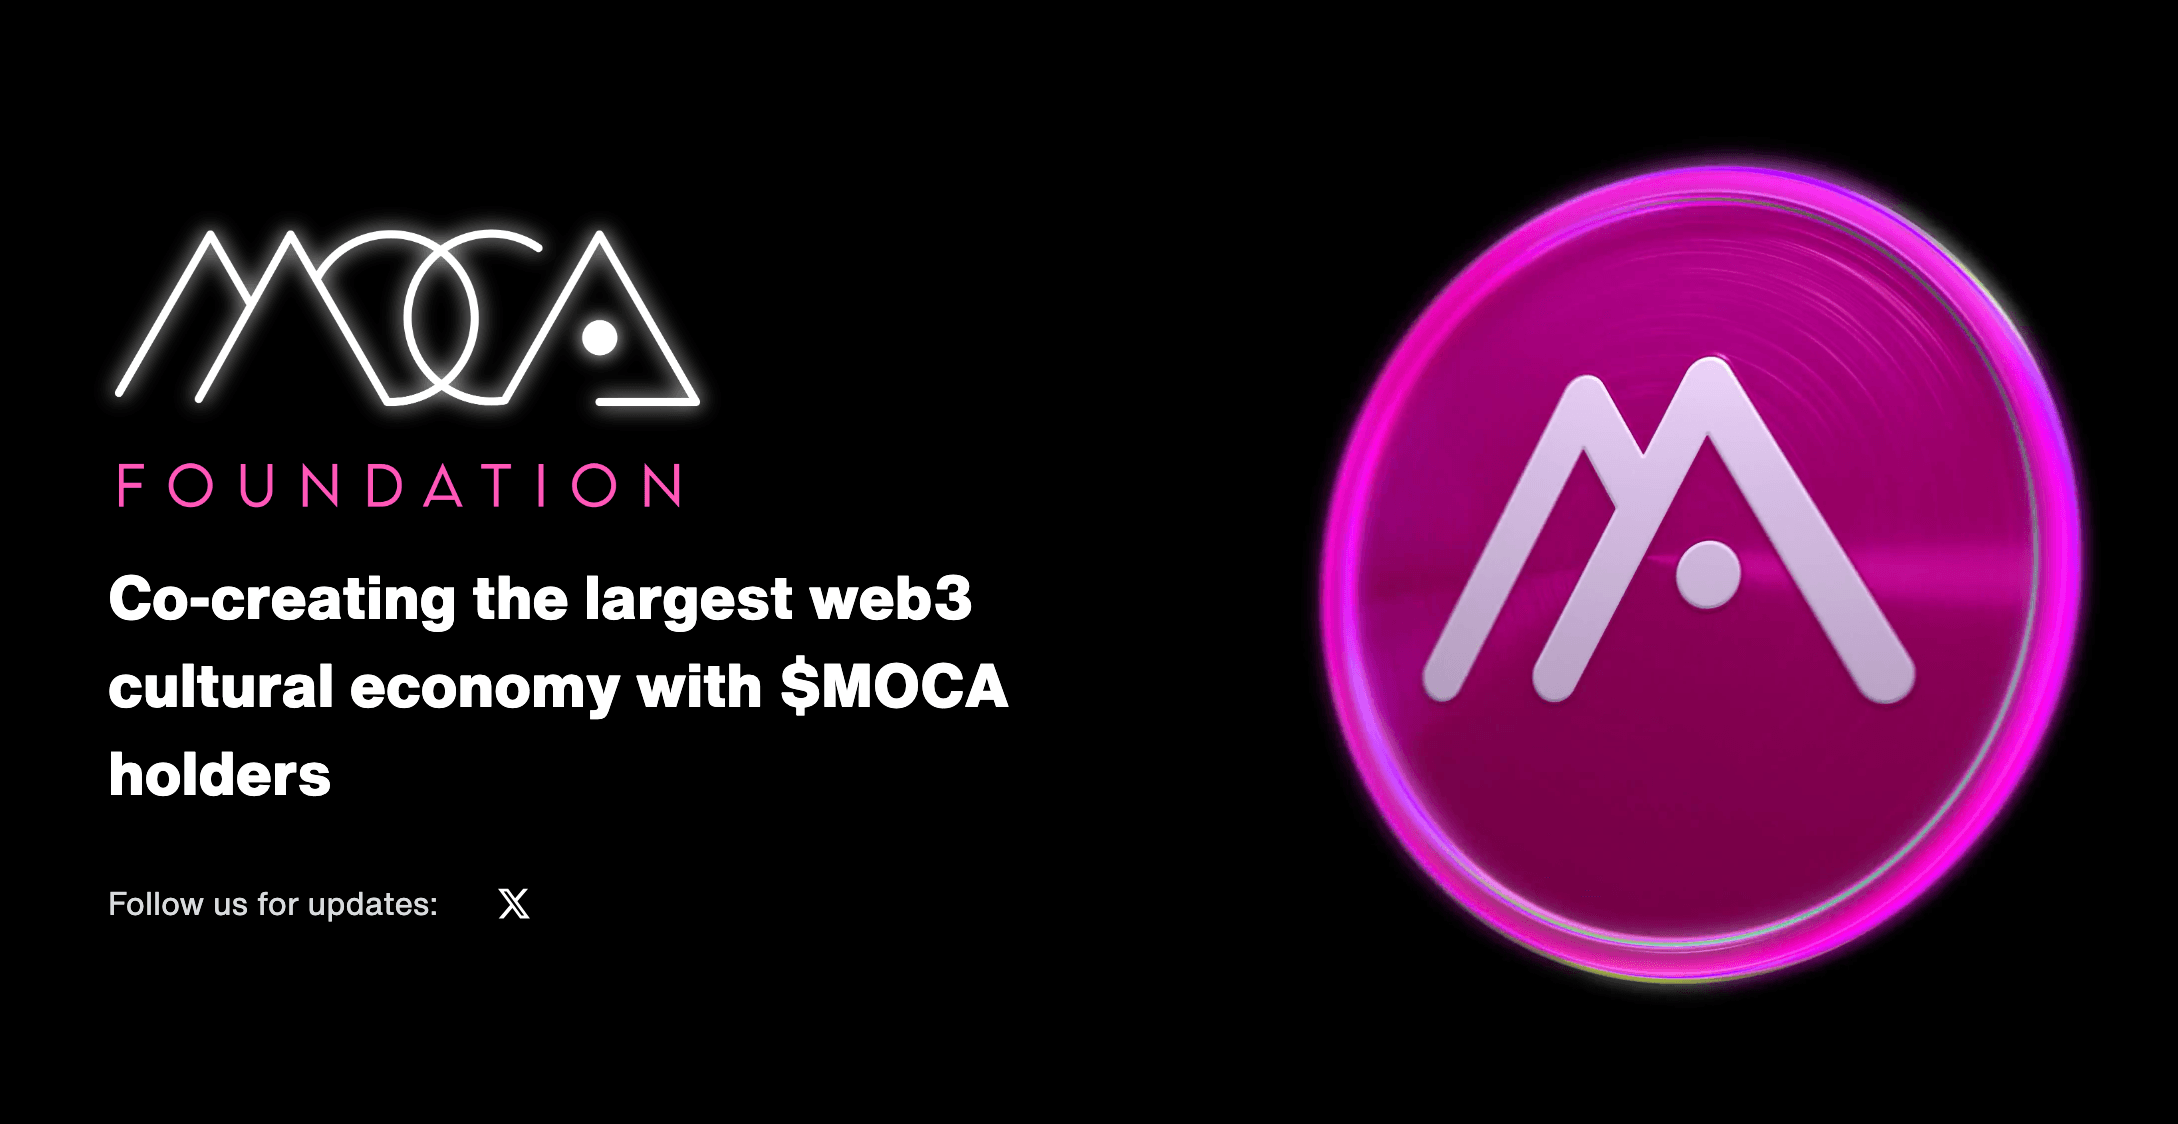 MOCA Foundation